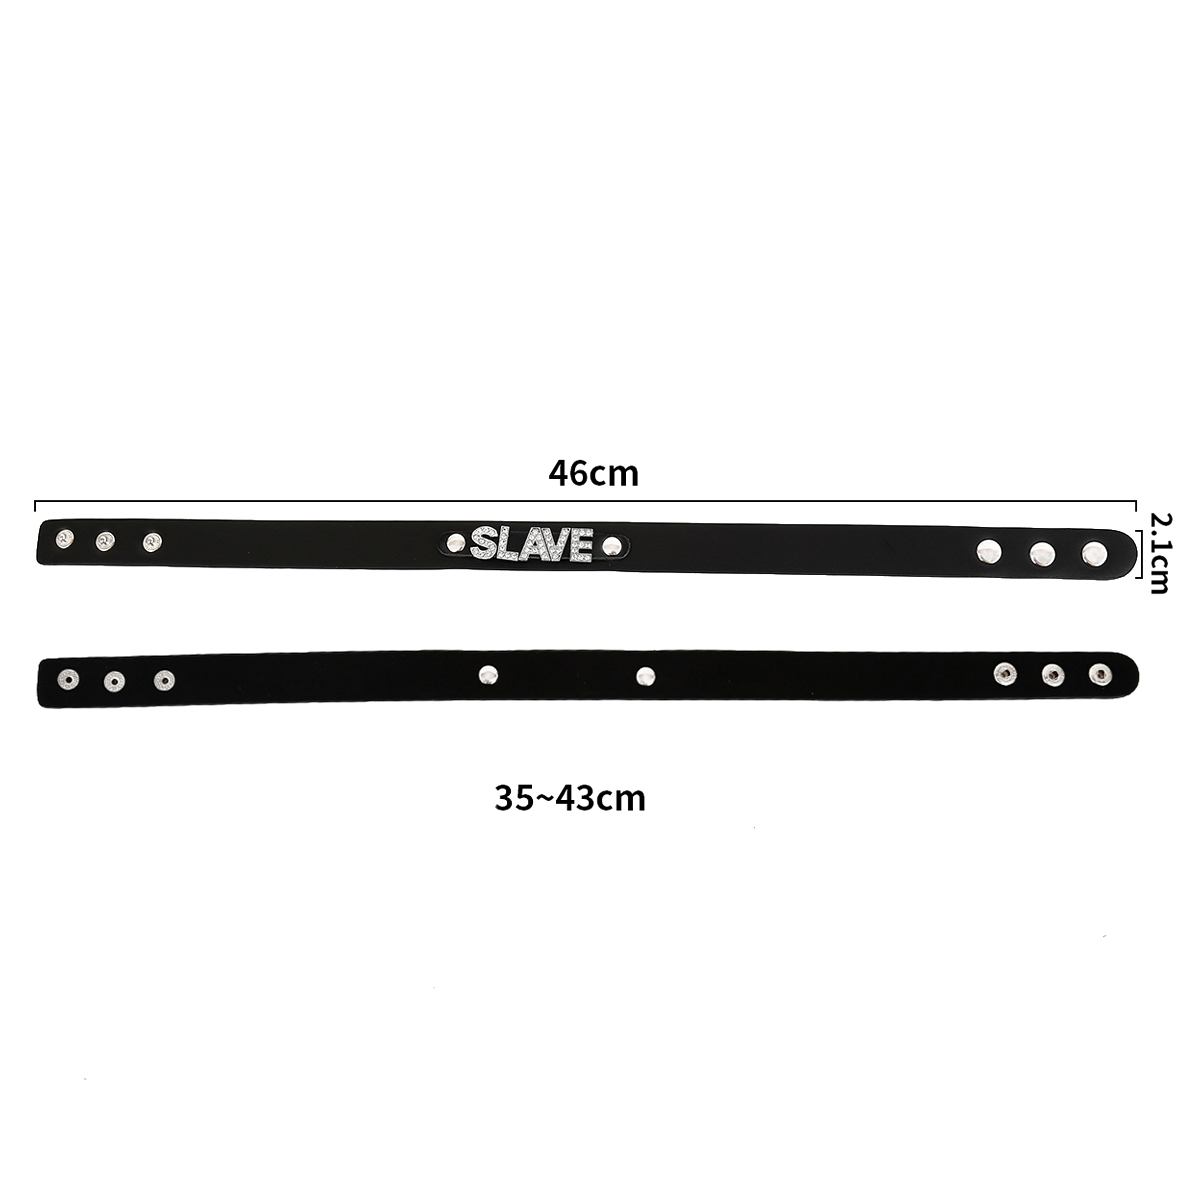 Deluxe-Collar-SLAVE-OPR-321119-3